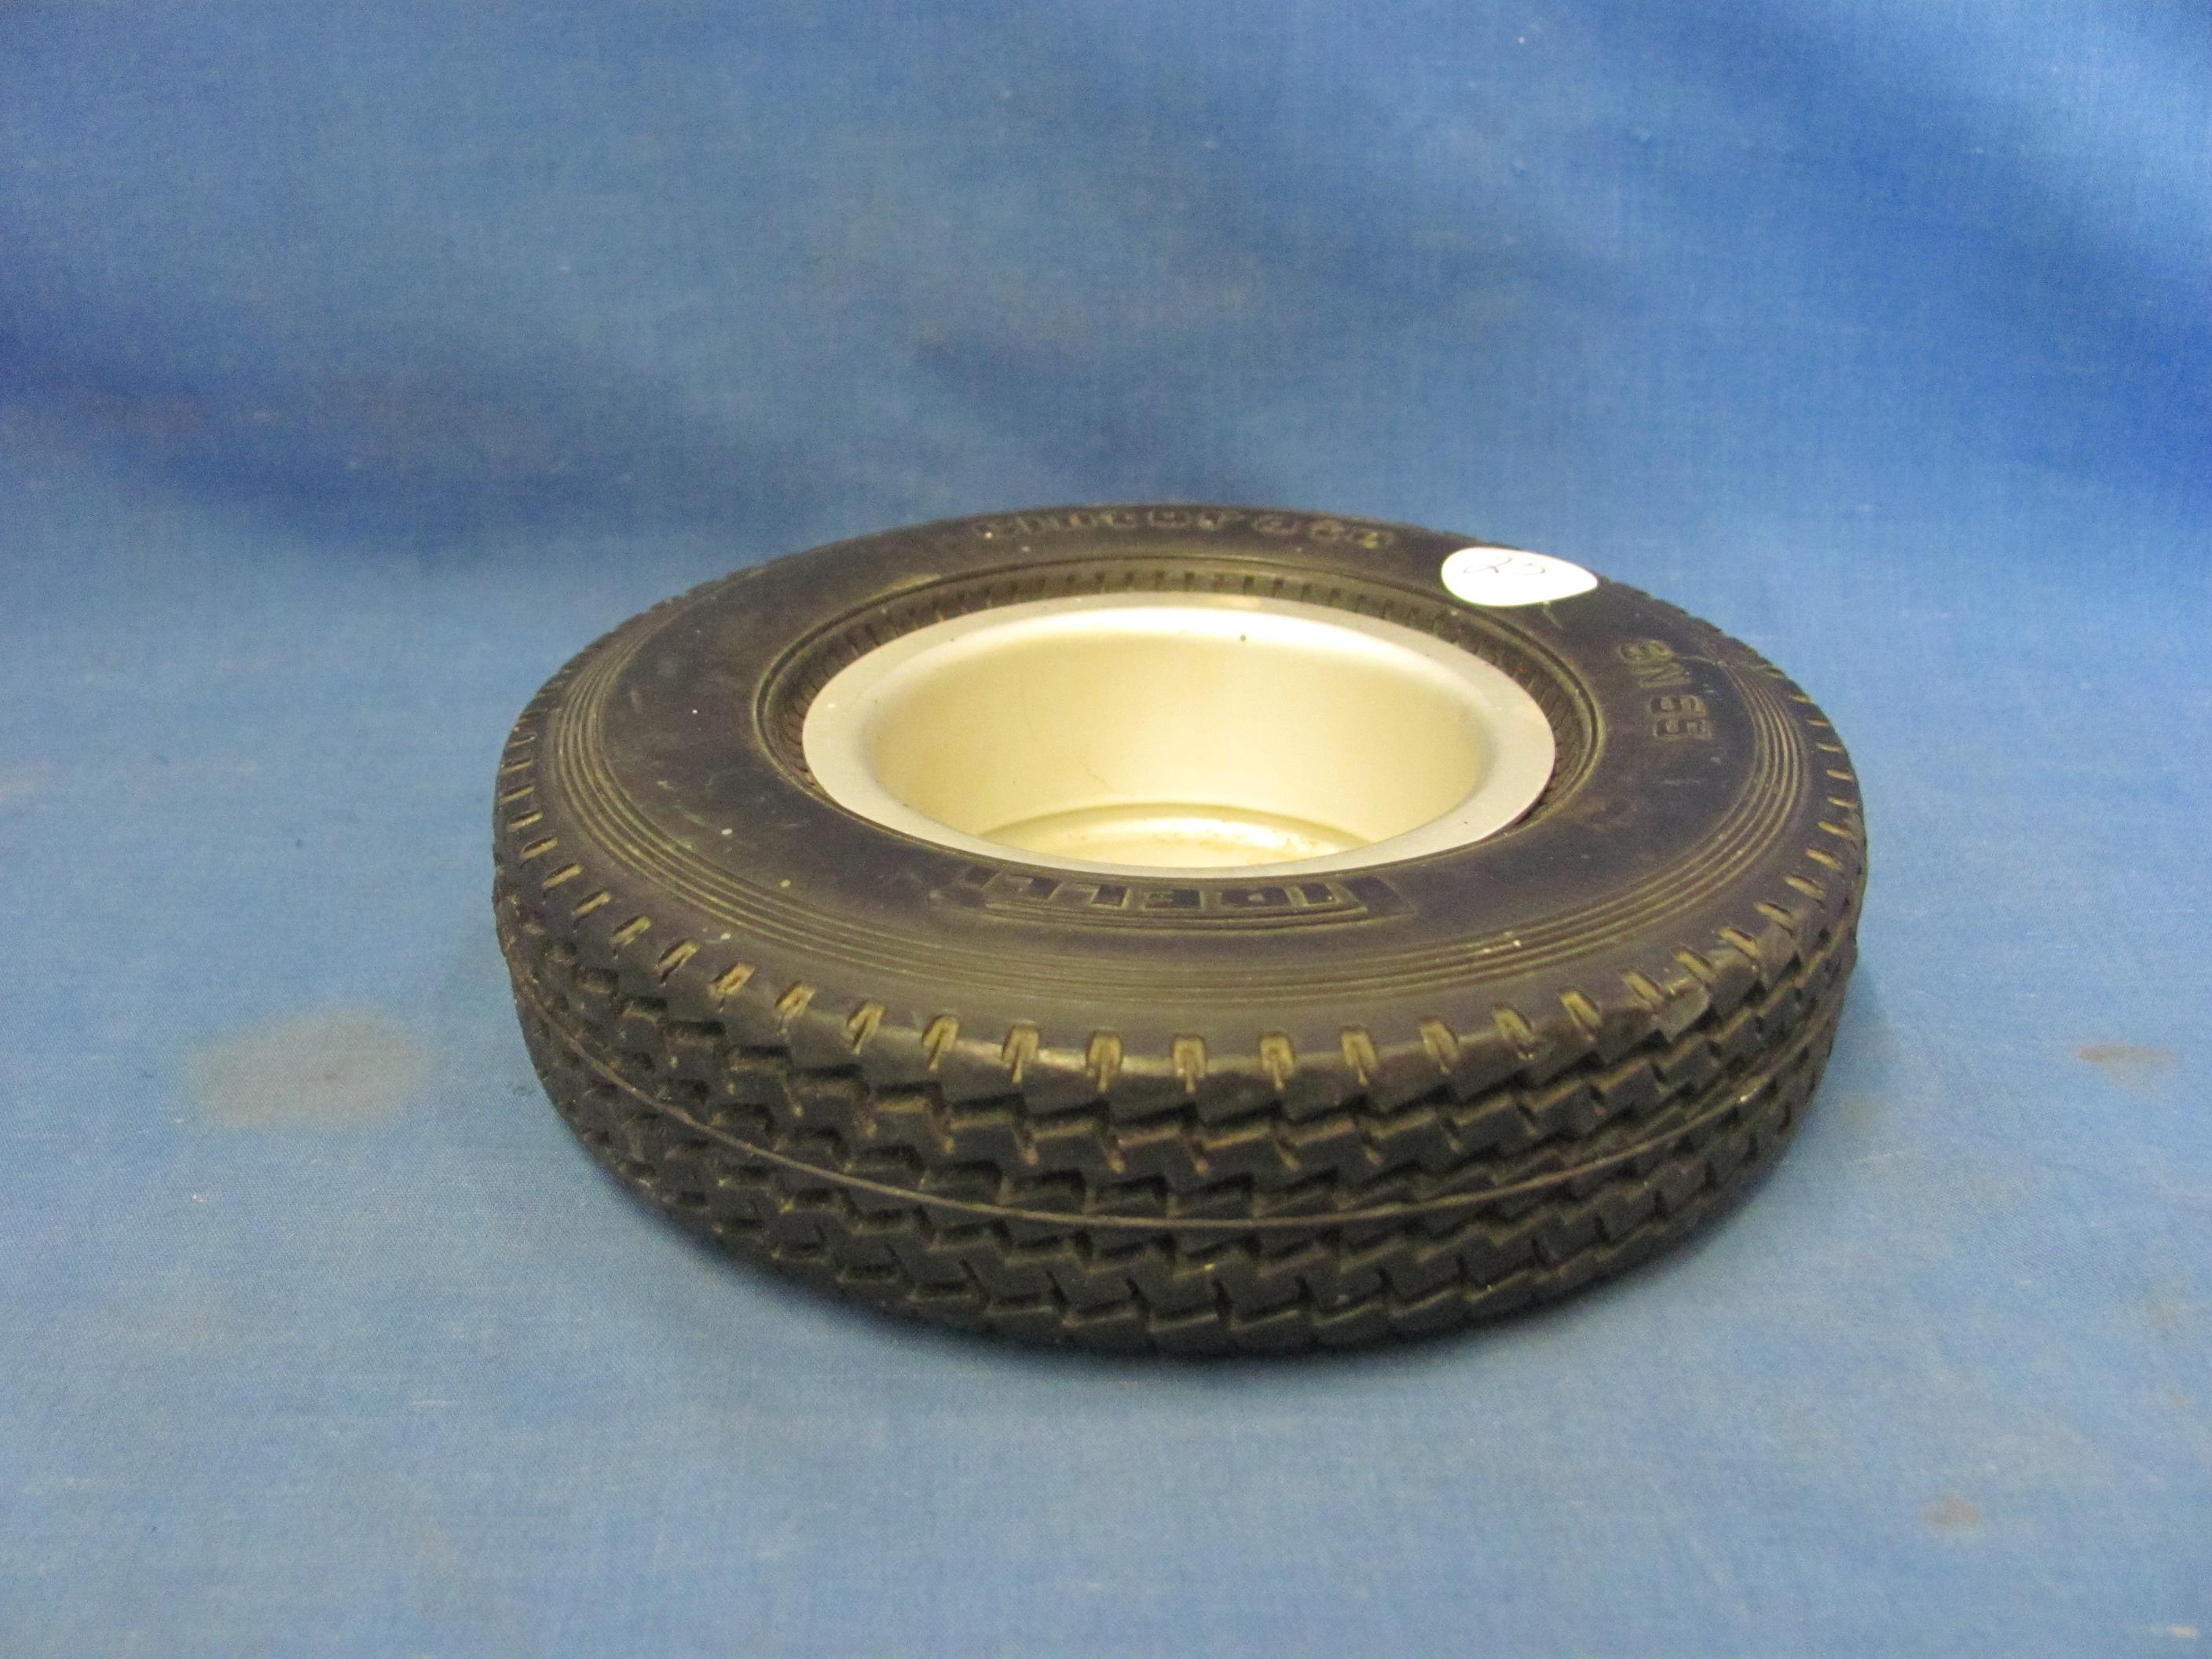 Firelli Cinturato Rubber Tire With Aluminum Dish – 5 3/4” D – As Shown